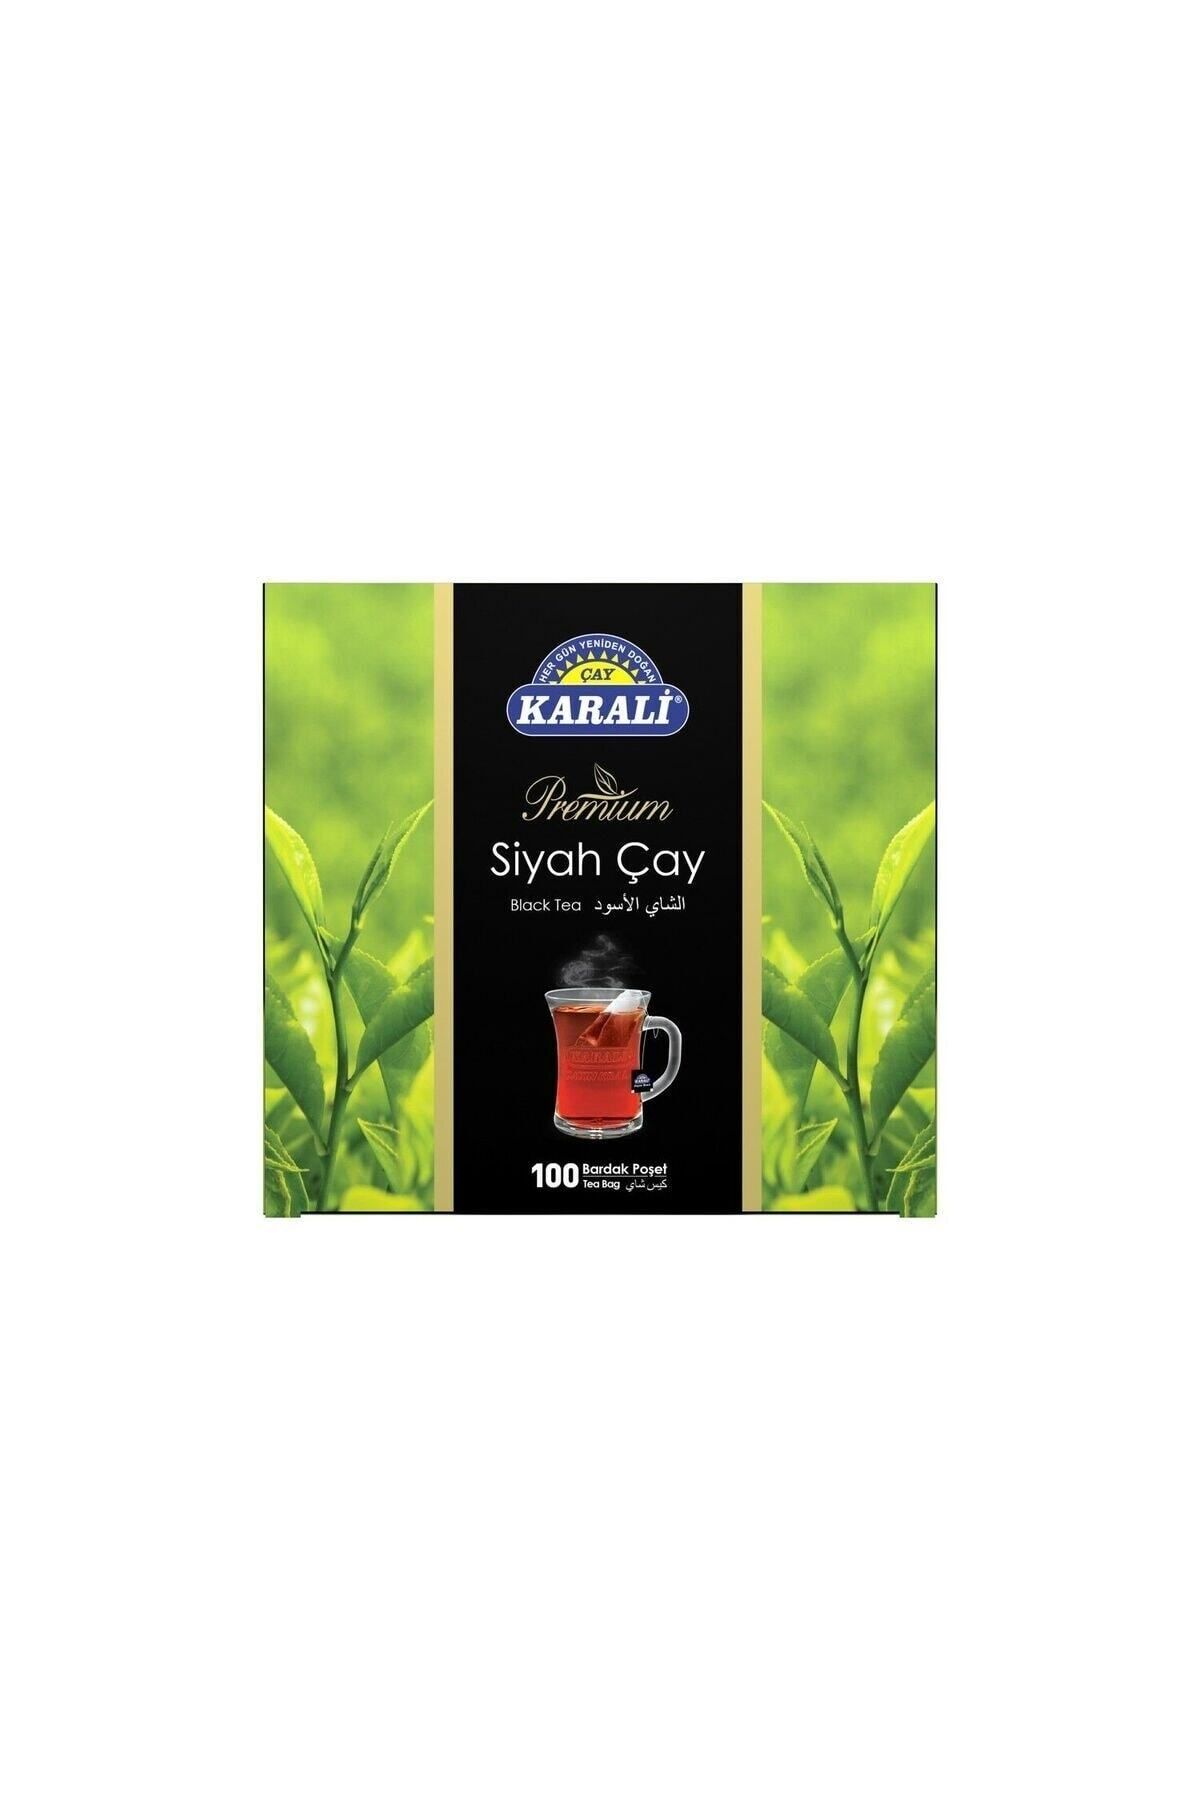 Karali Çay Karali Premium Siyah Çay Bardak Poşet 100*2 Gr